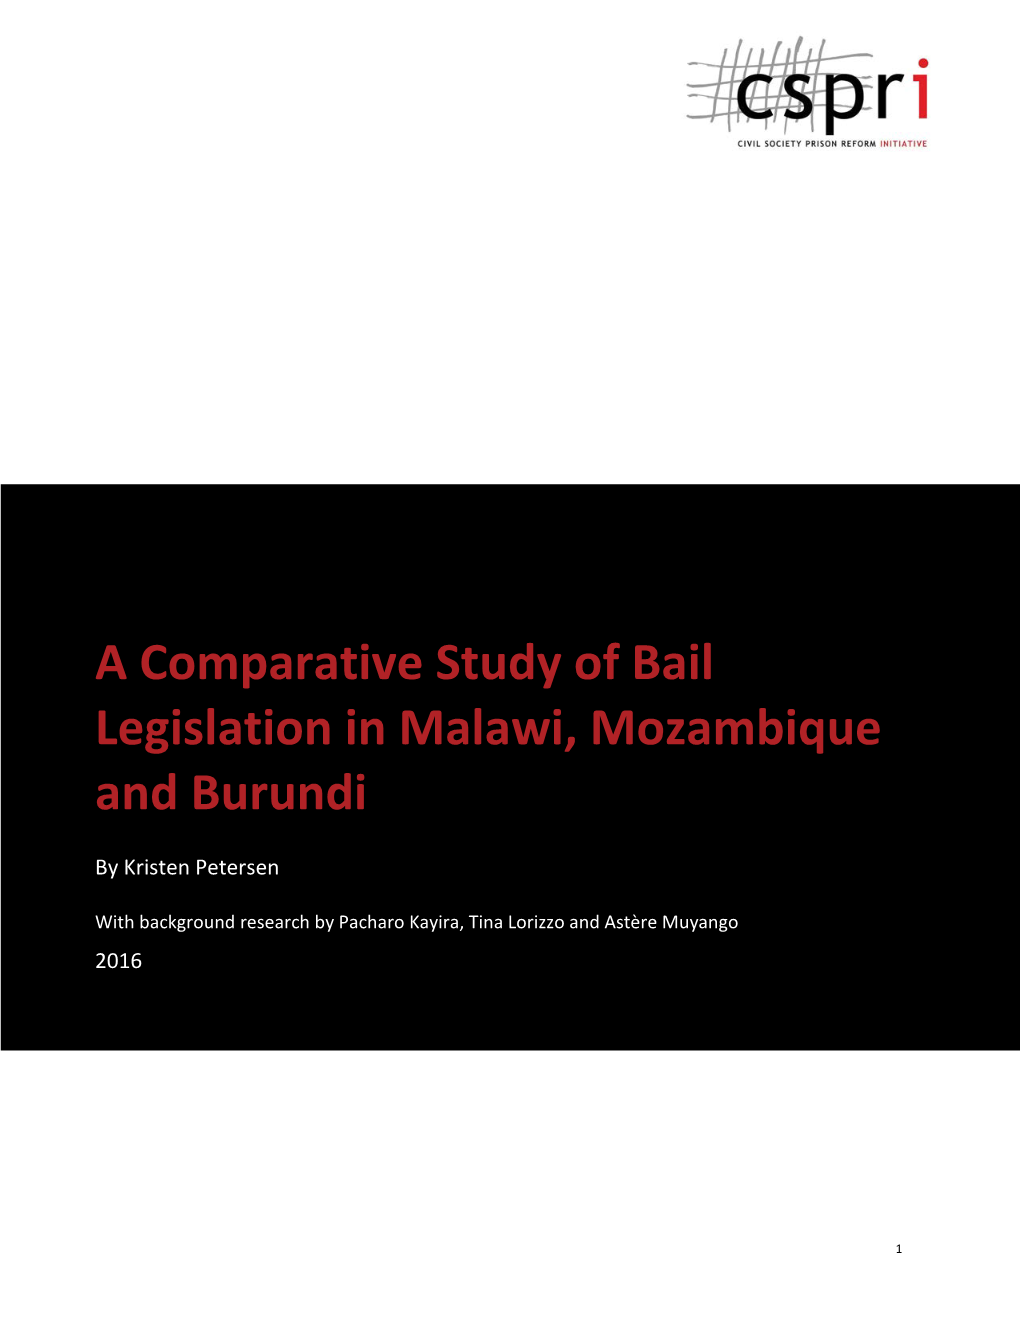 A Comparative Study of Bail Legislation in Malawi, Mozambique and Burundi